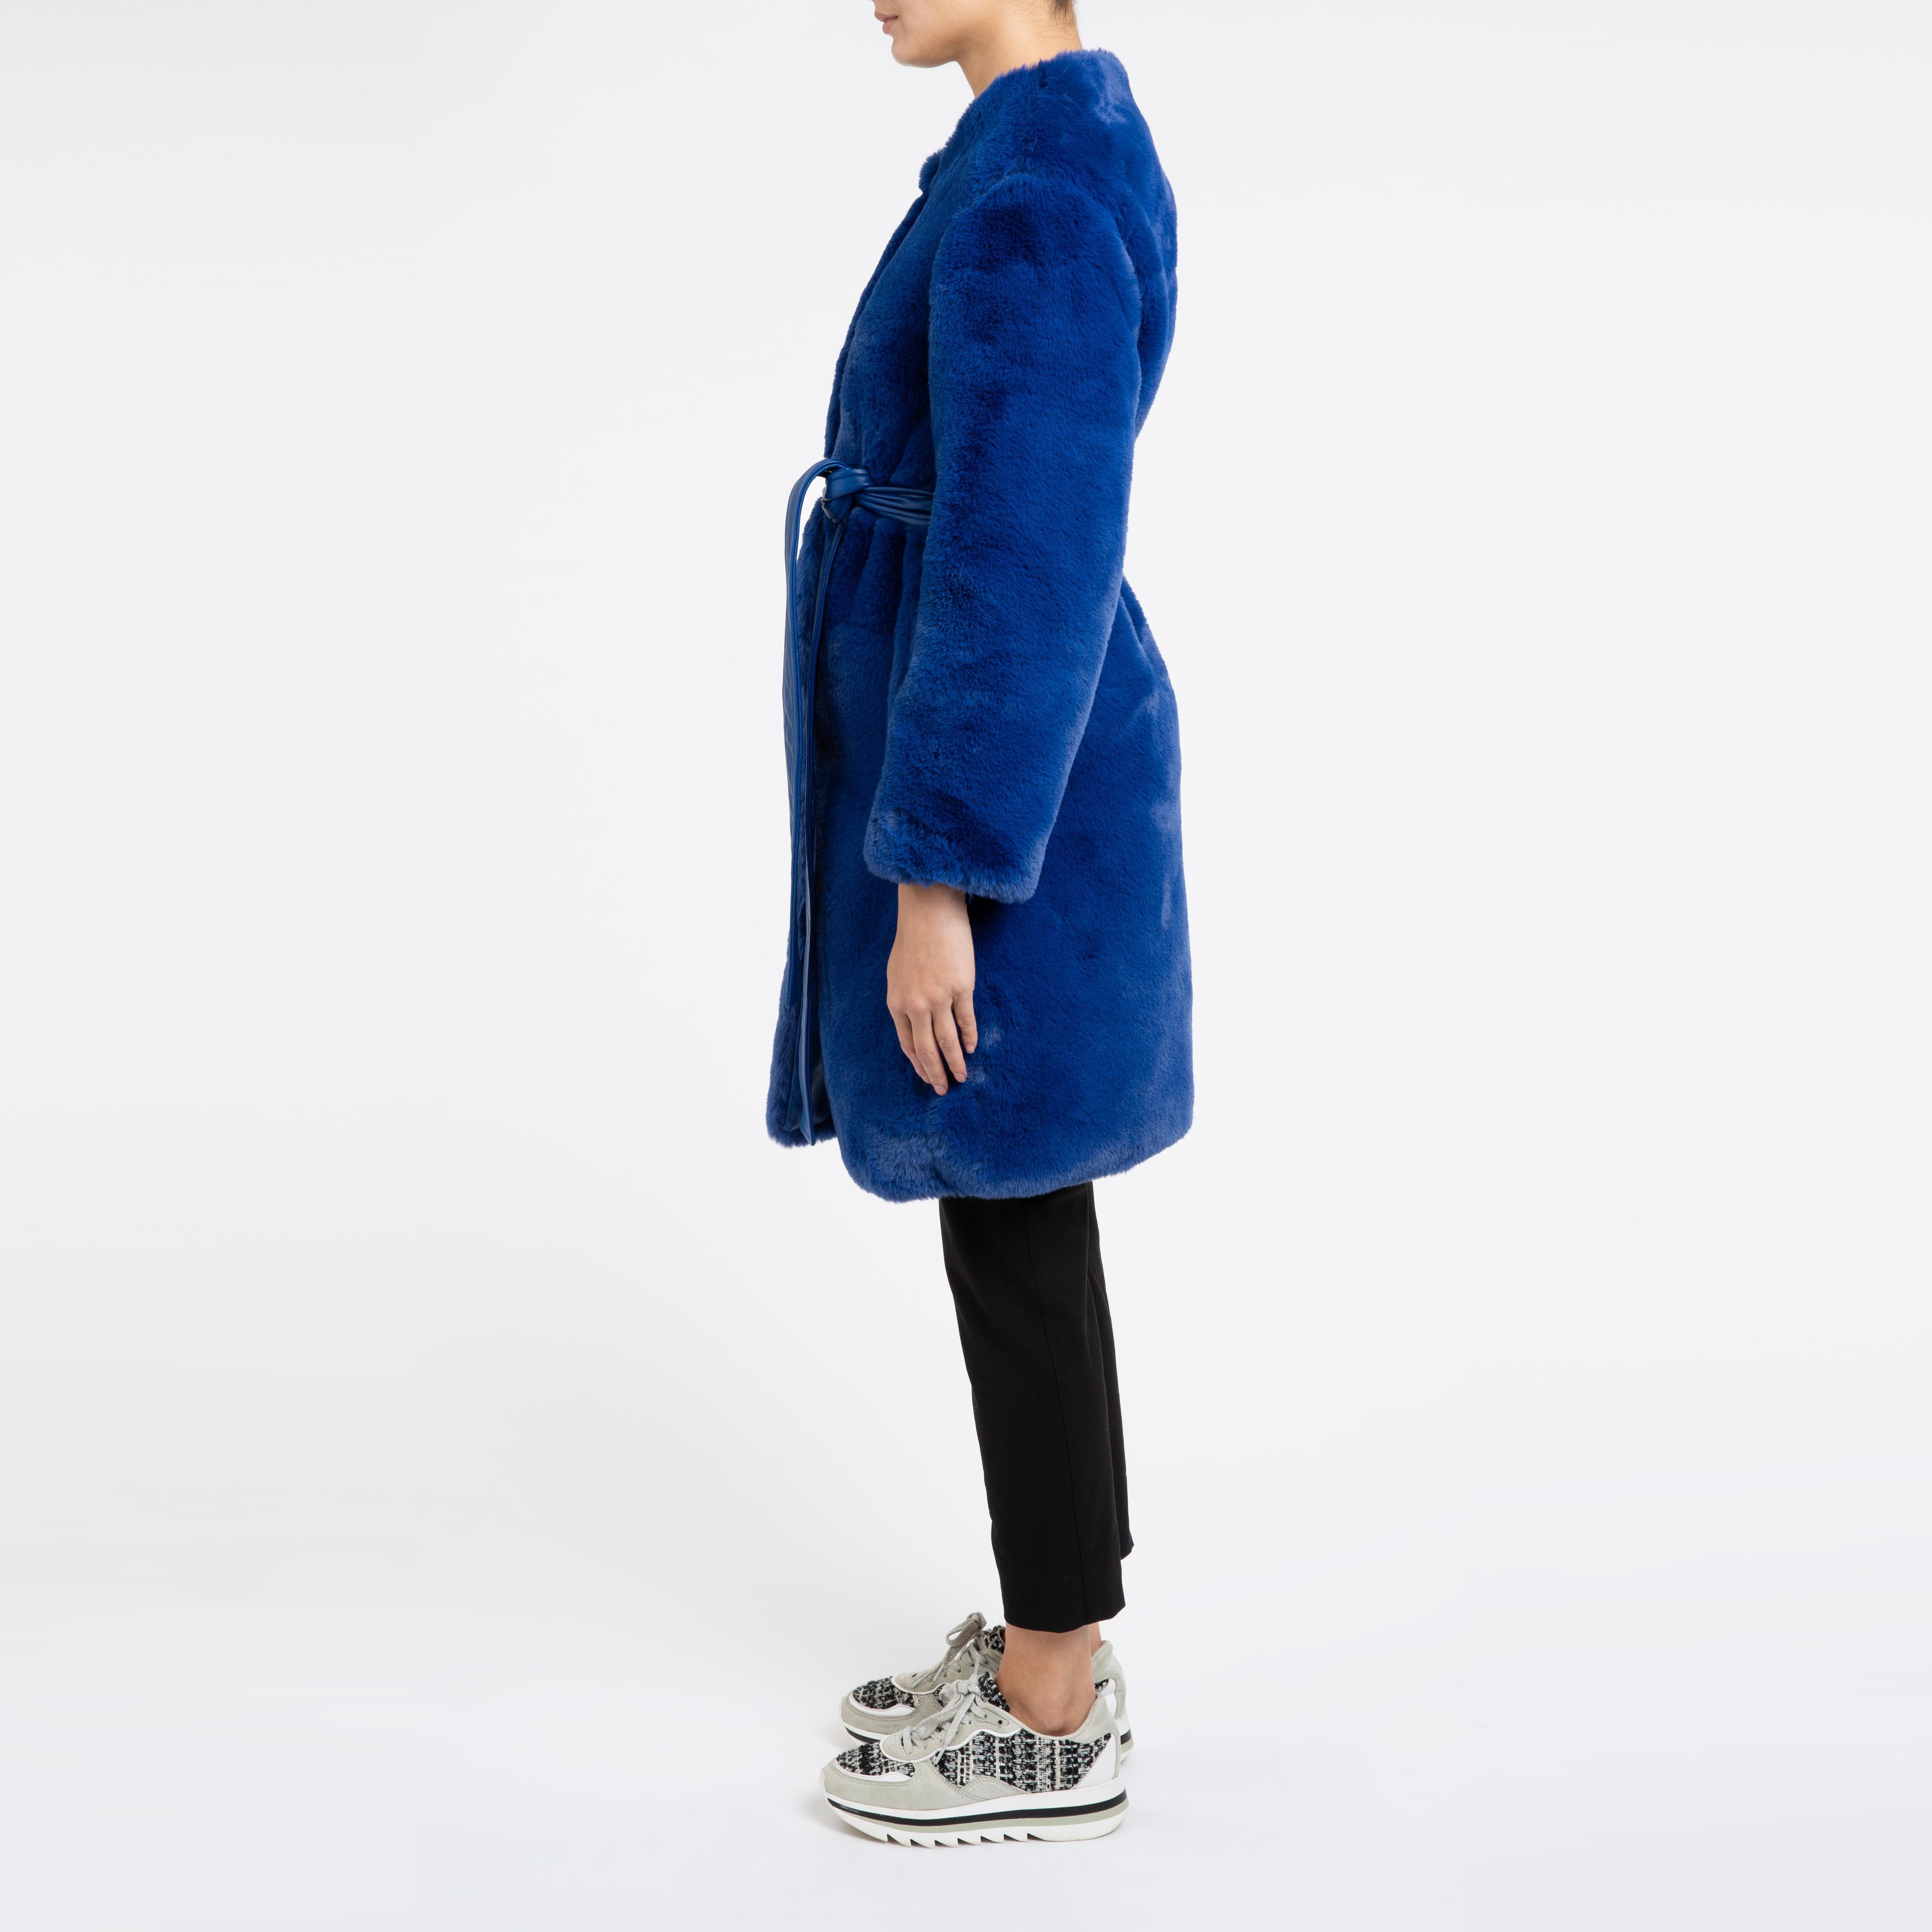 Verheyen London Serena  Collarless Faux Fur Coat in Blue - Size uk 6  For Sale 3